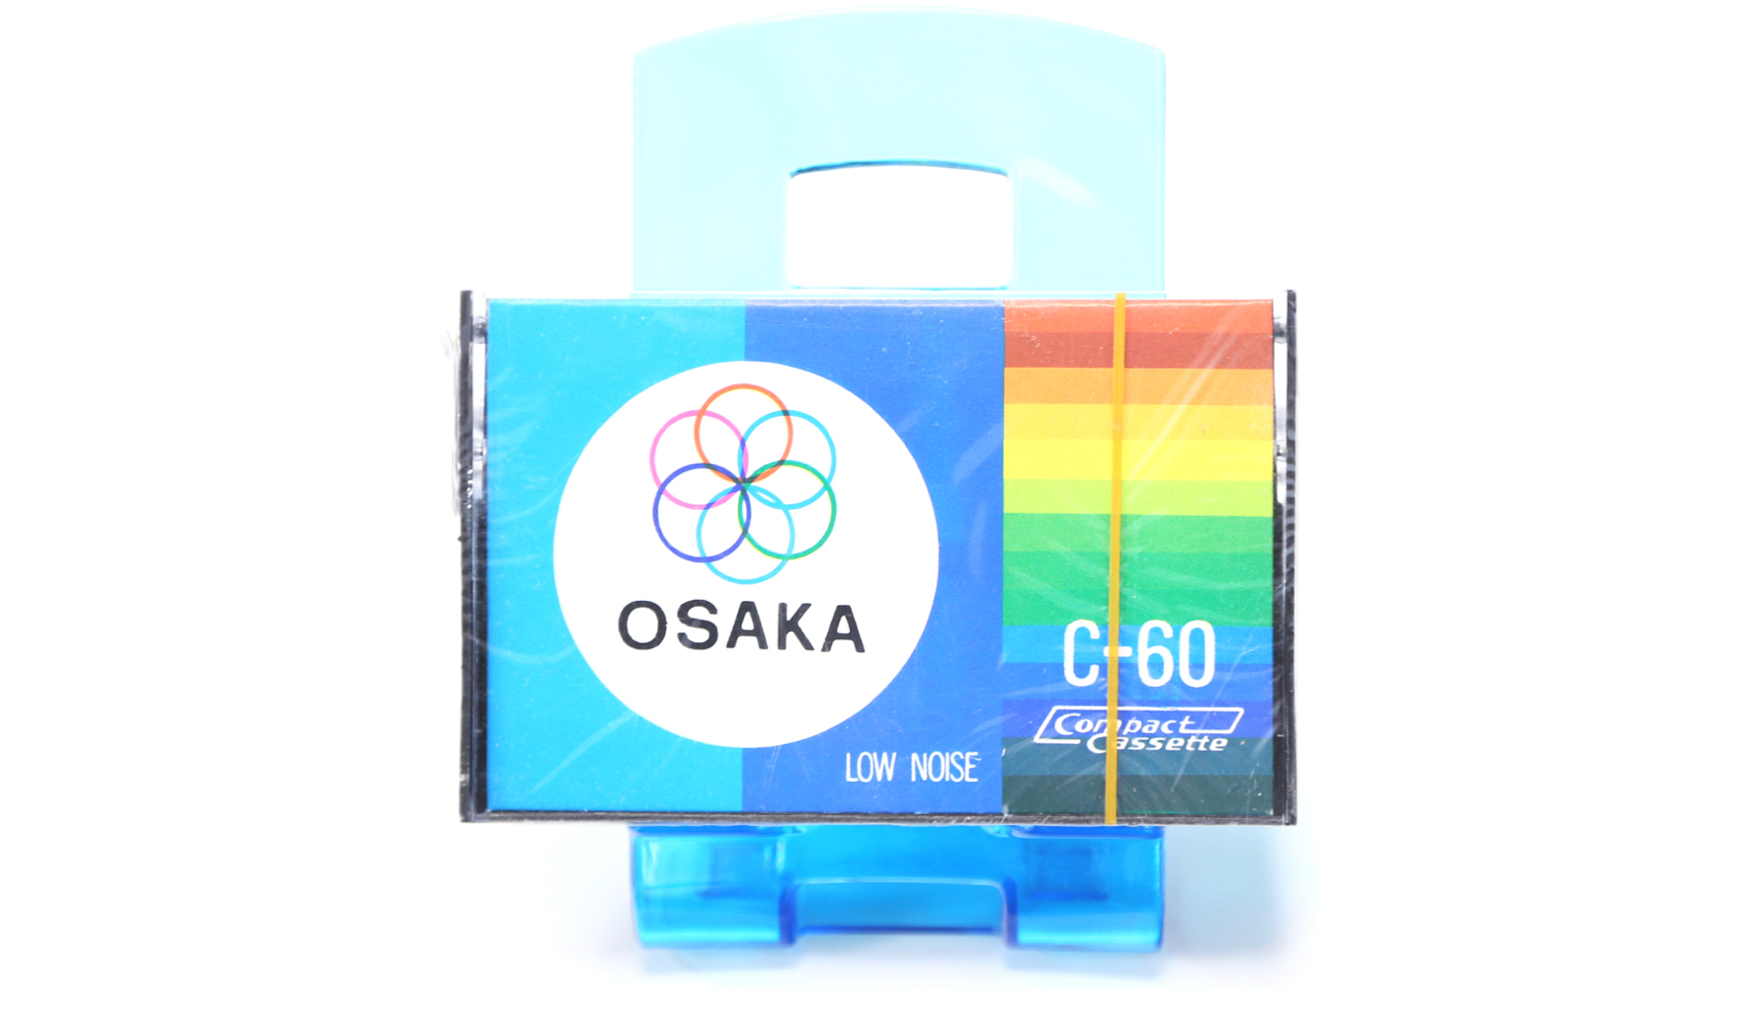 OSAKA C-60 Position Normal